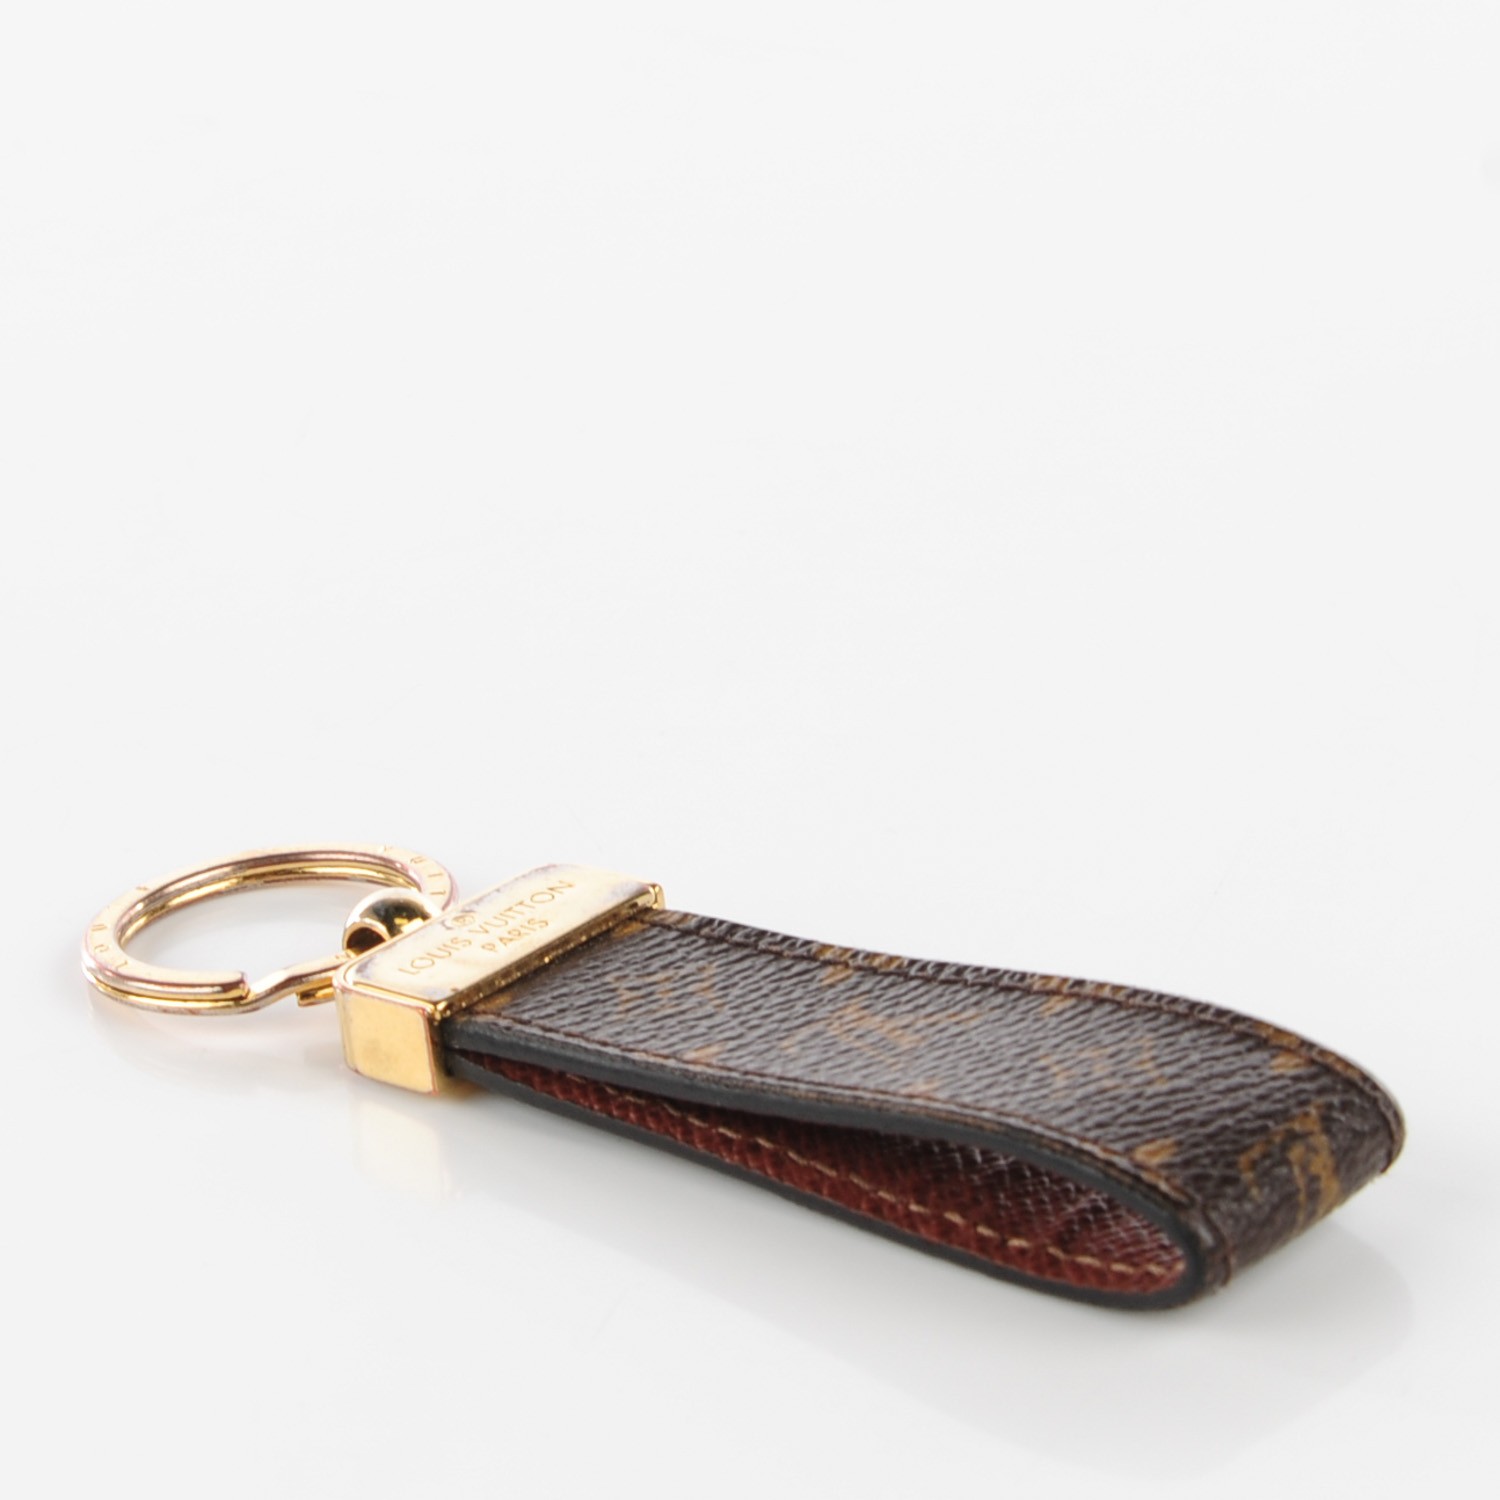 LV Dragonne key holder S00 - Men - Accessories